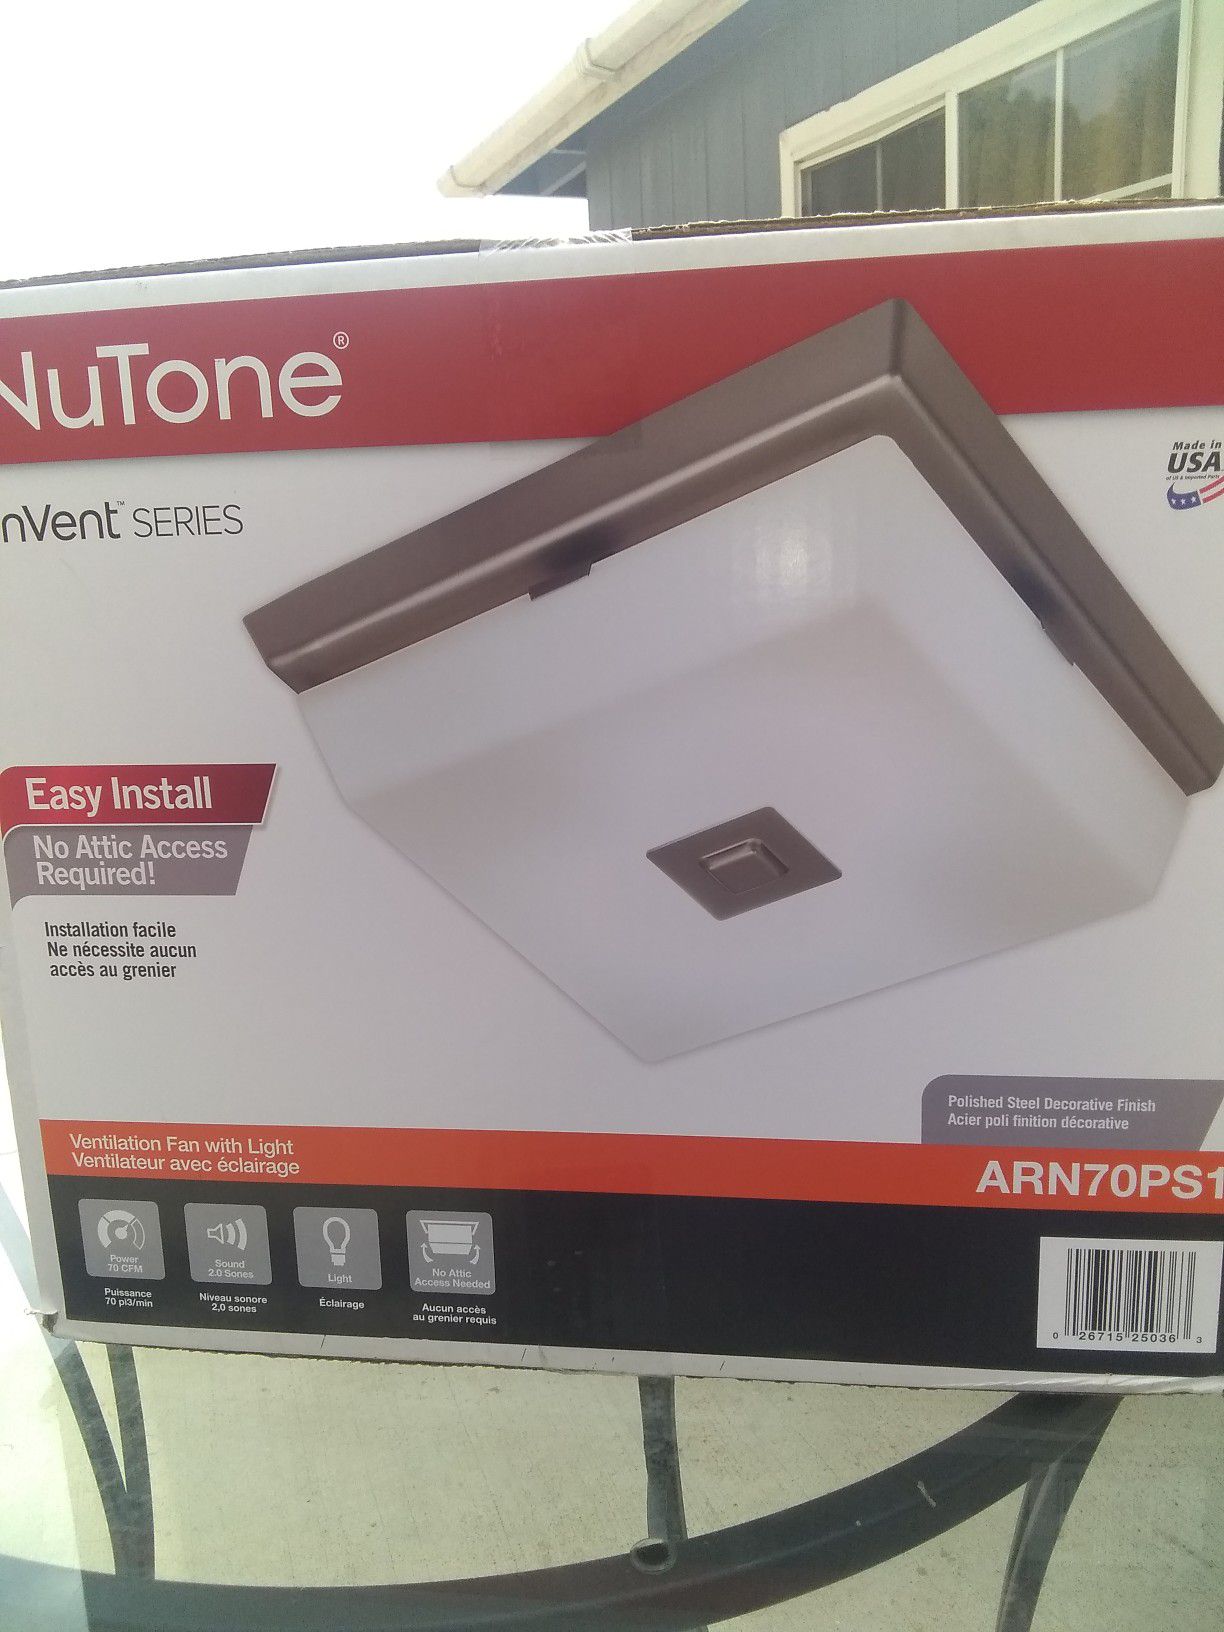 Nutone ventilation fan with light